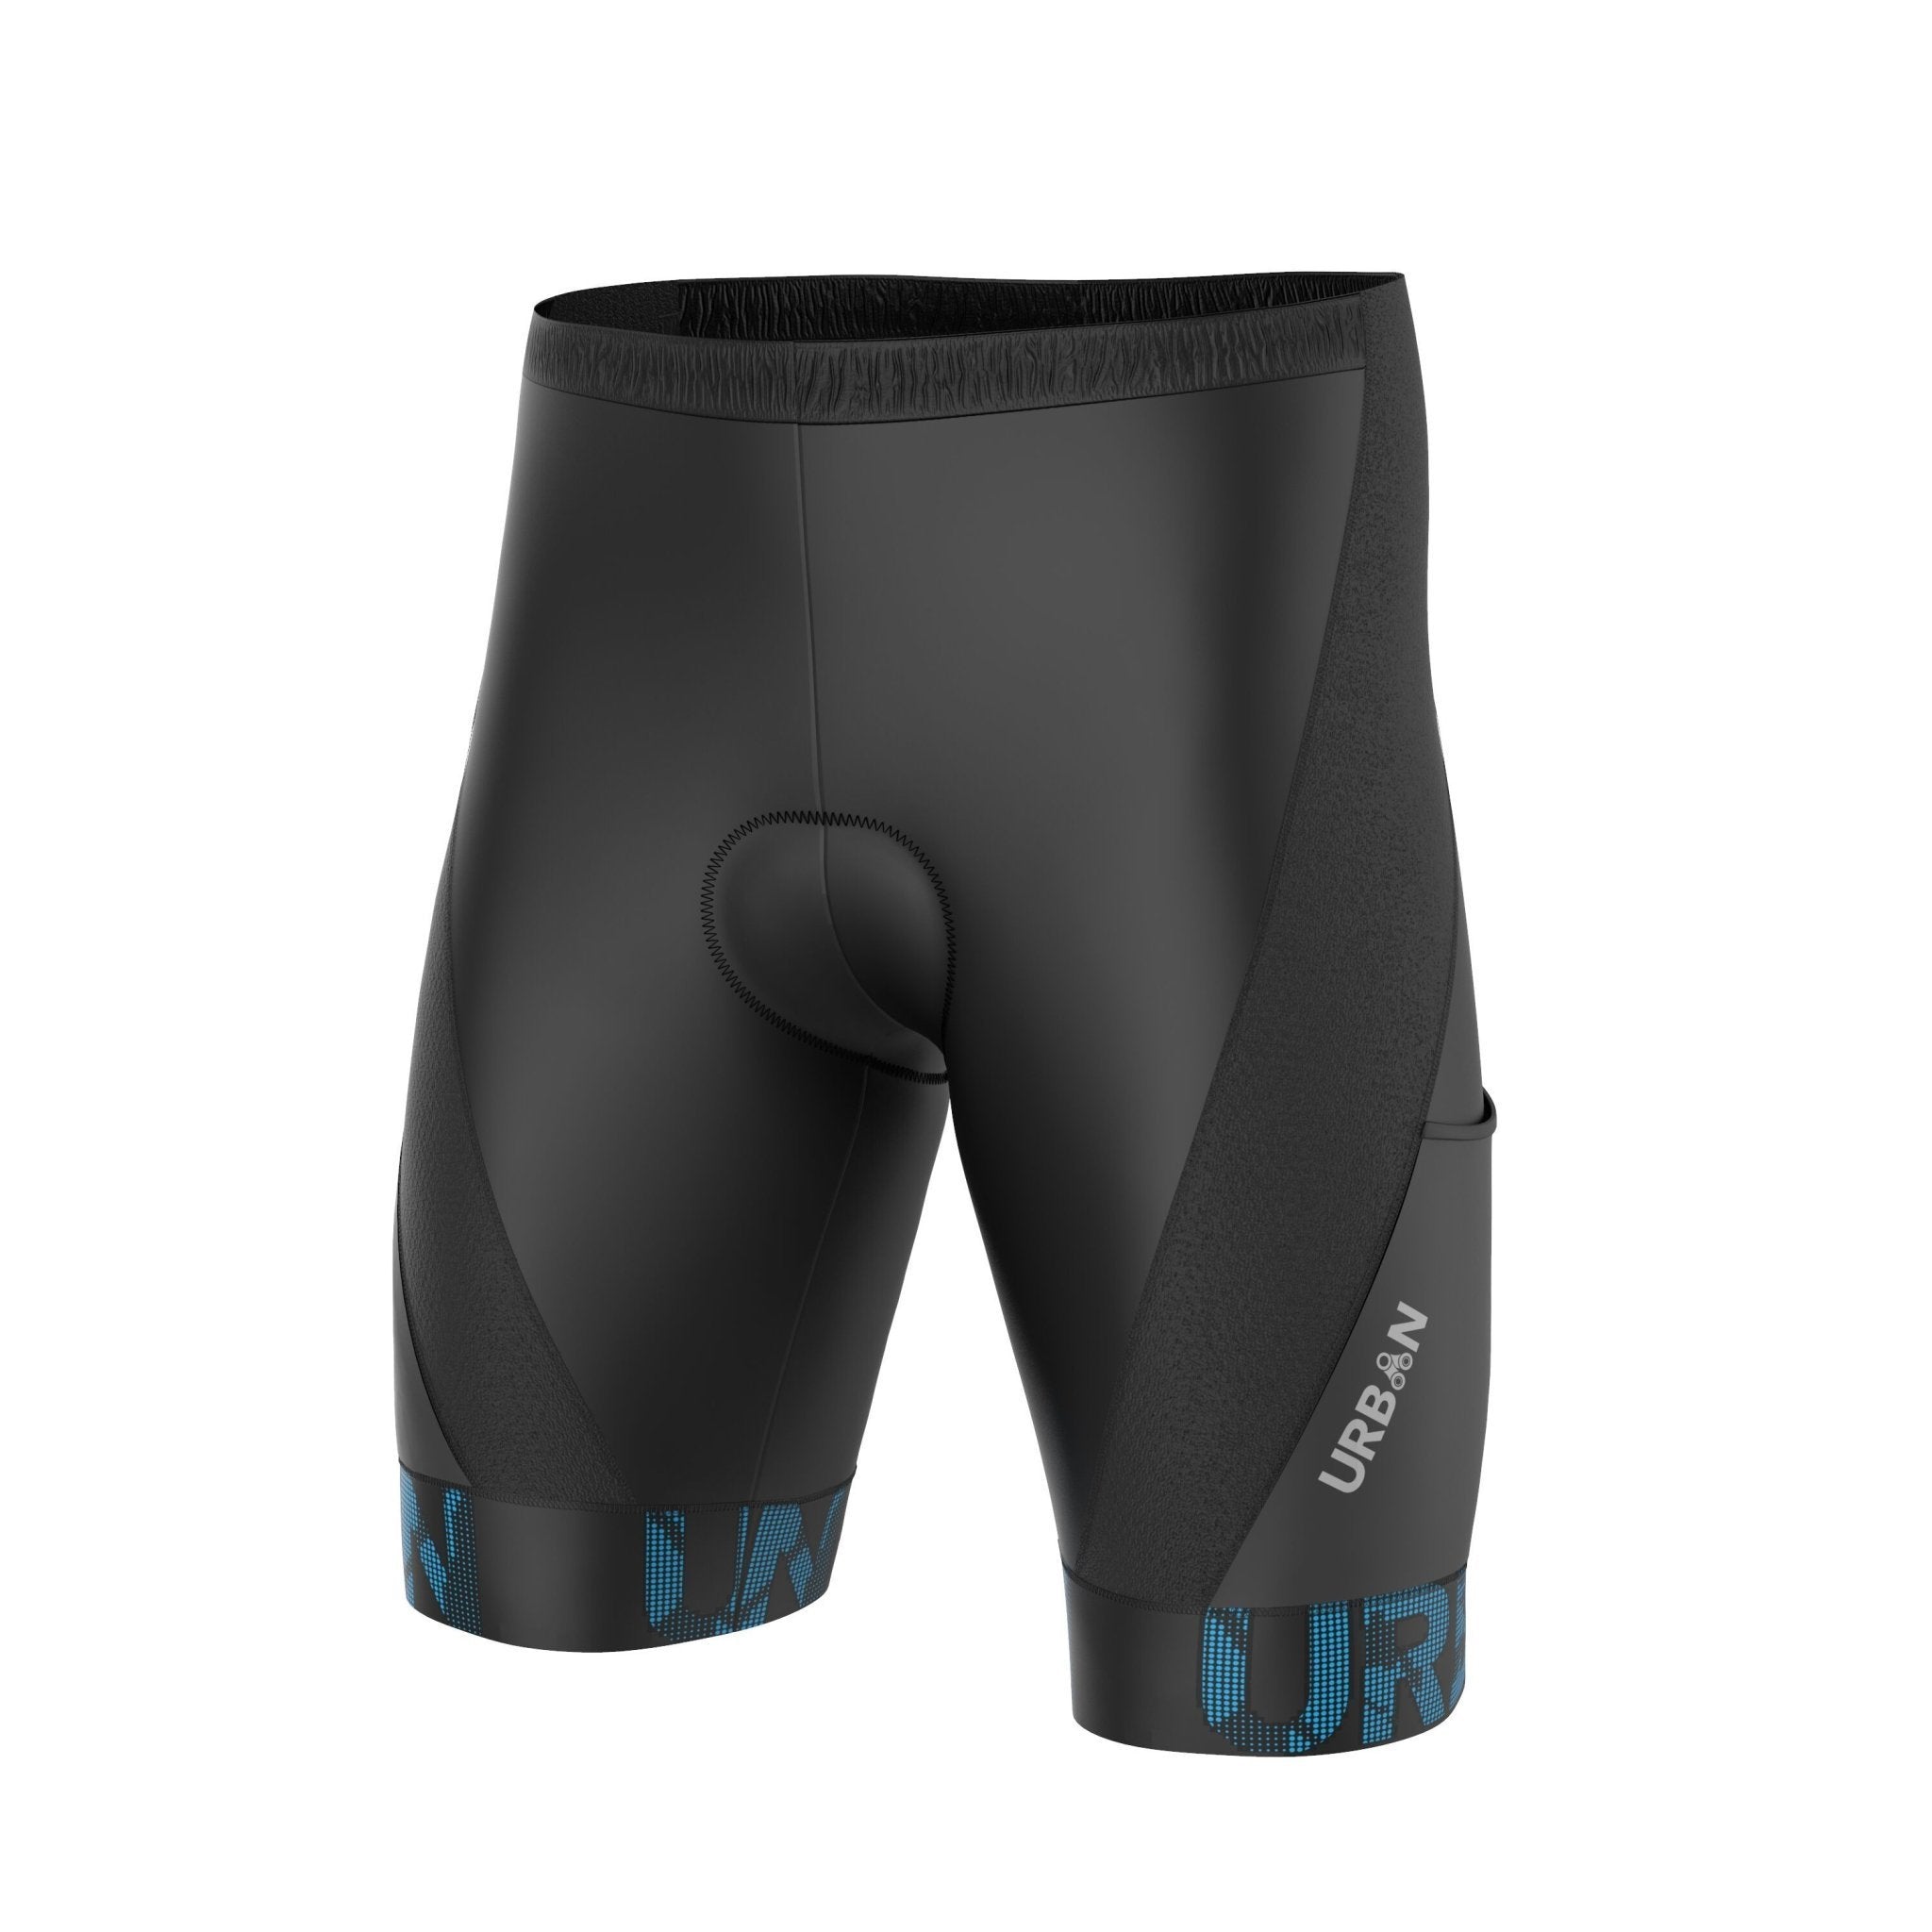 REAL JOE Cycling Shorts - 10 inch Inseam With Standard Padding